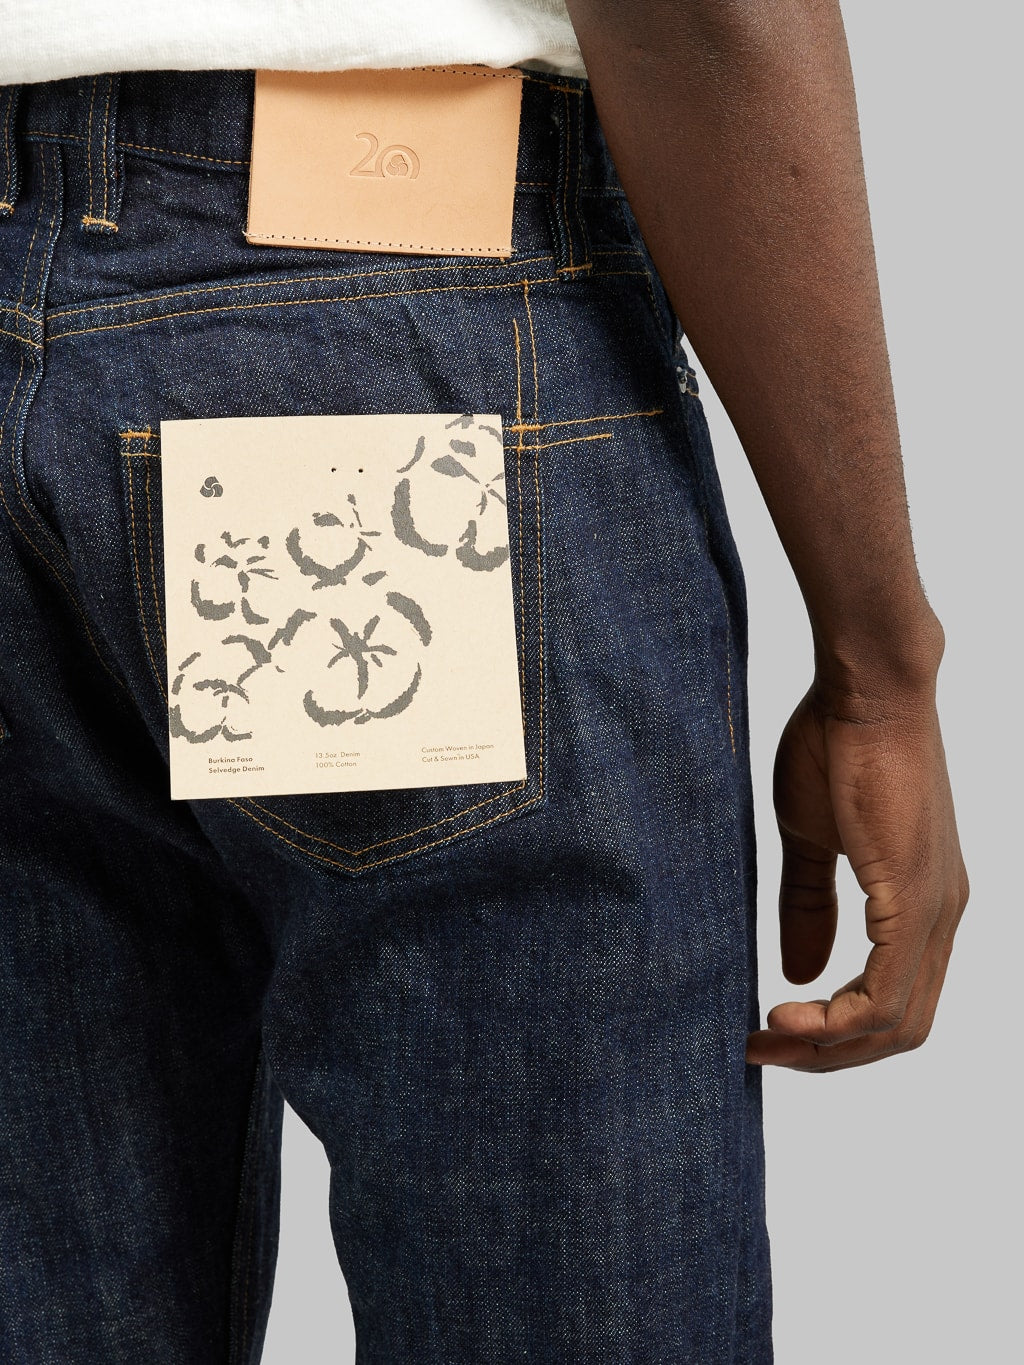 3sixteen CT 20th Anniversary Burkina Faso Classic Tapered Jeans pocket flasher